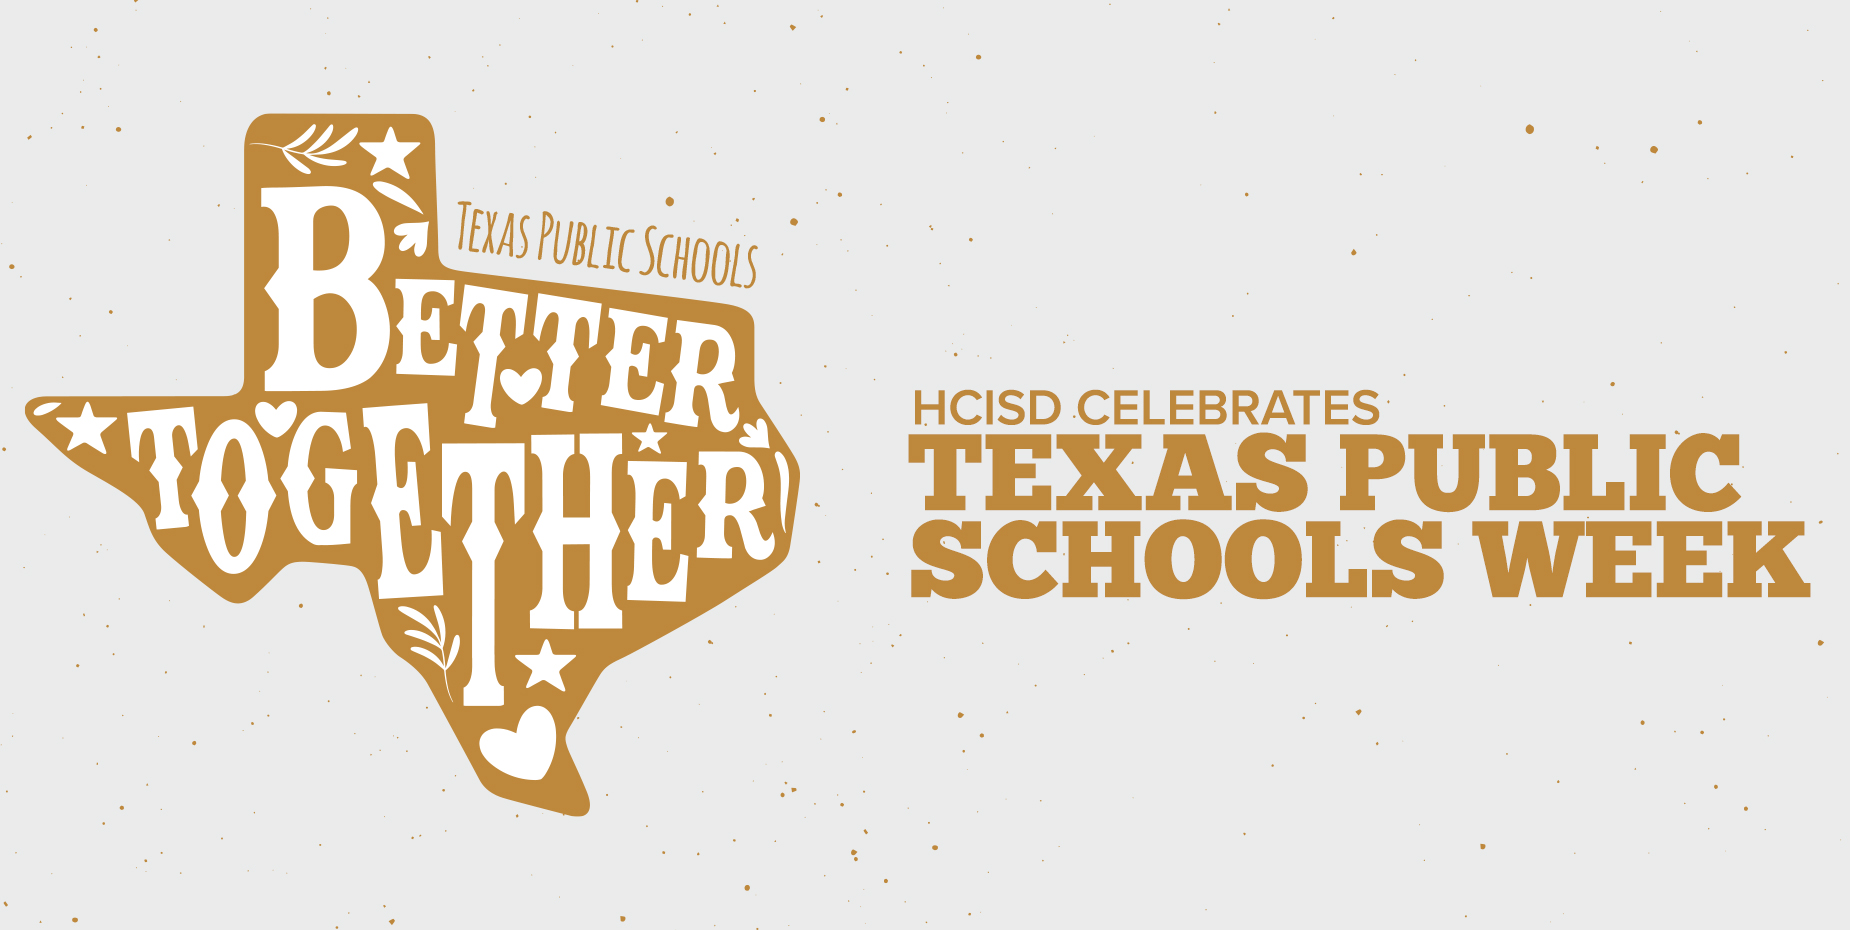 HCISD celebrates Texas Public Schools Week